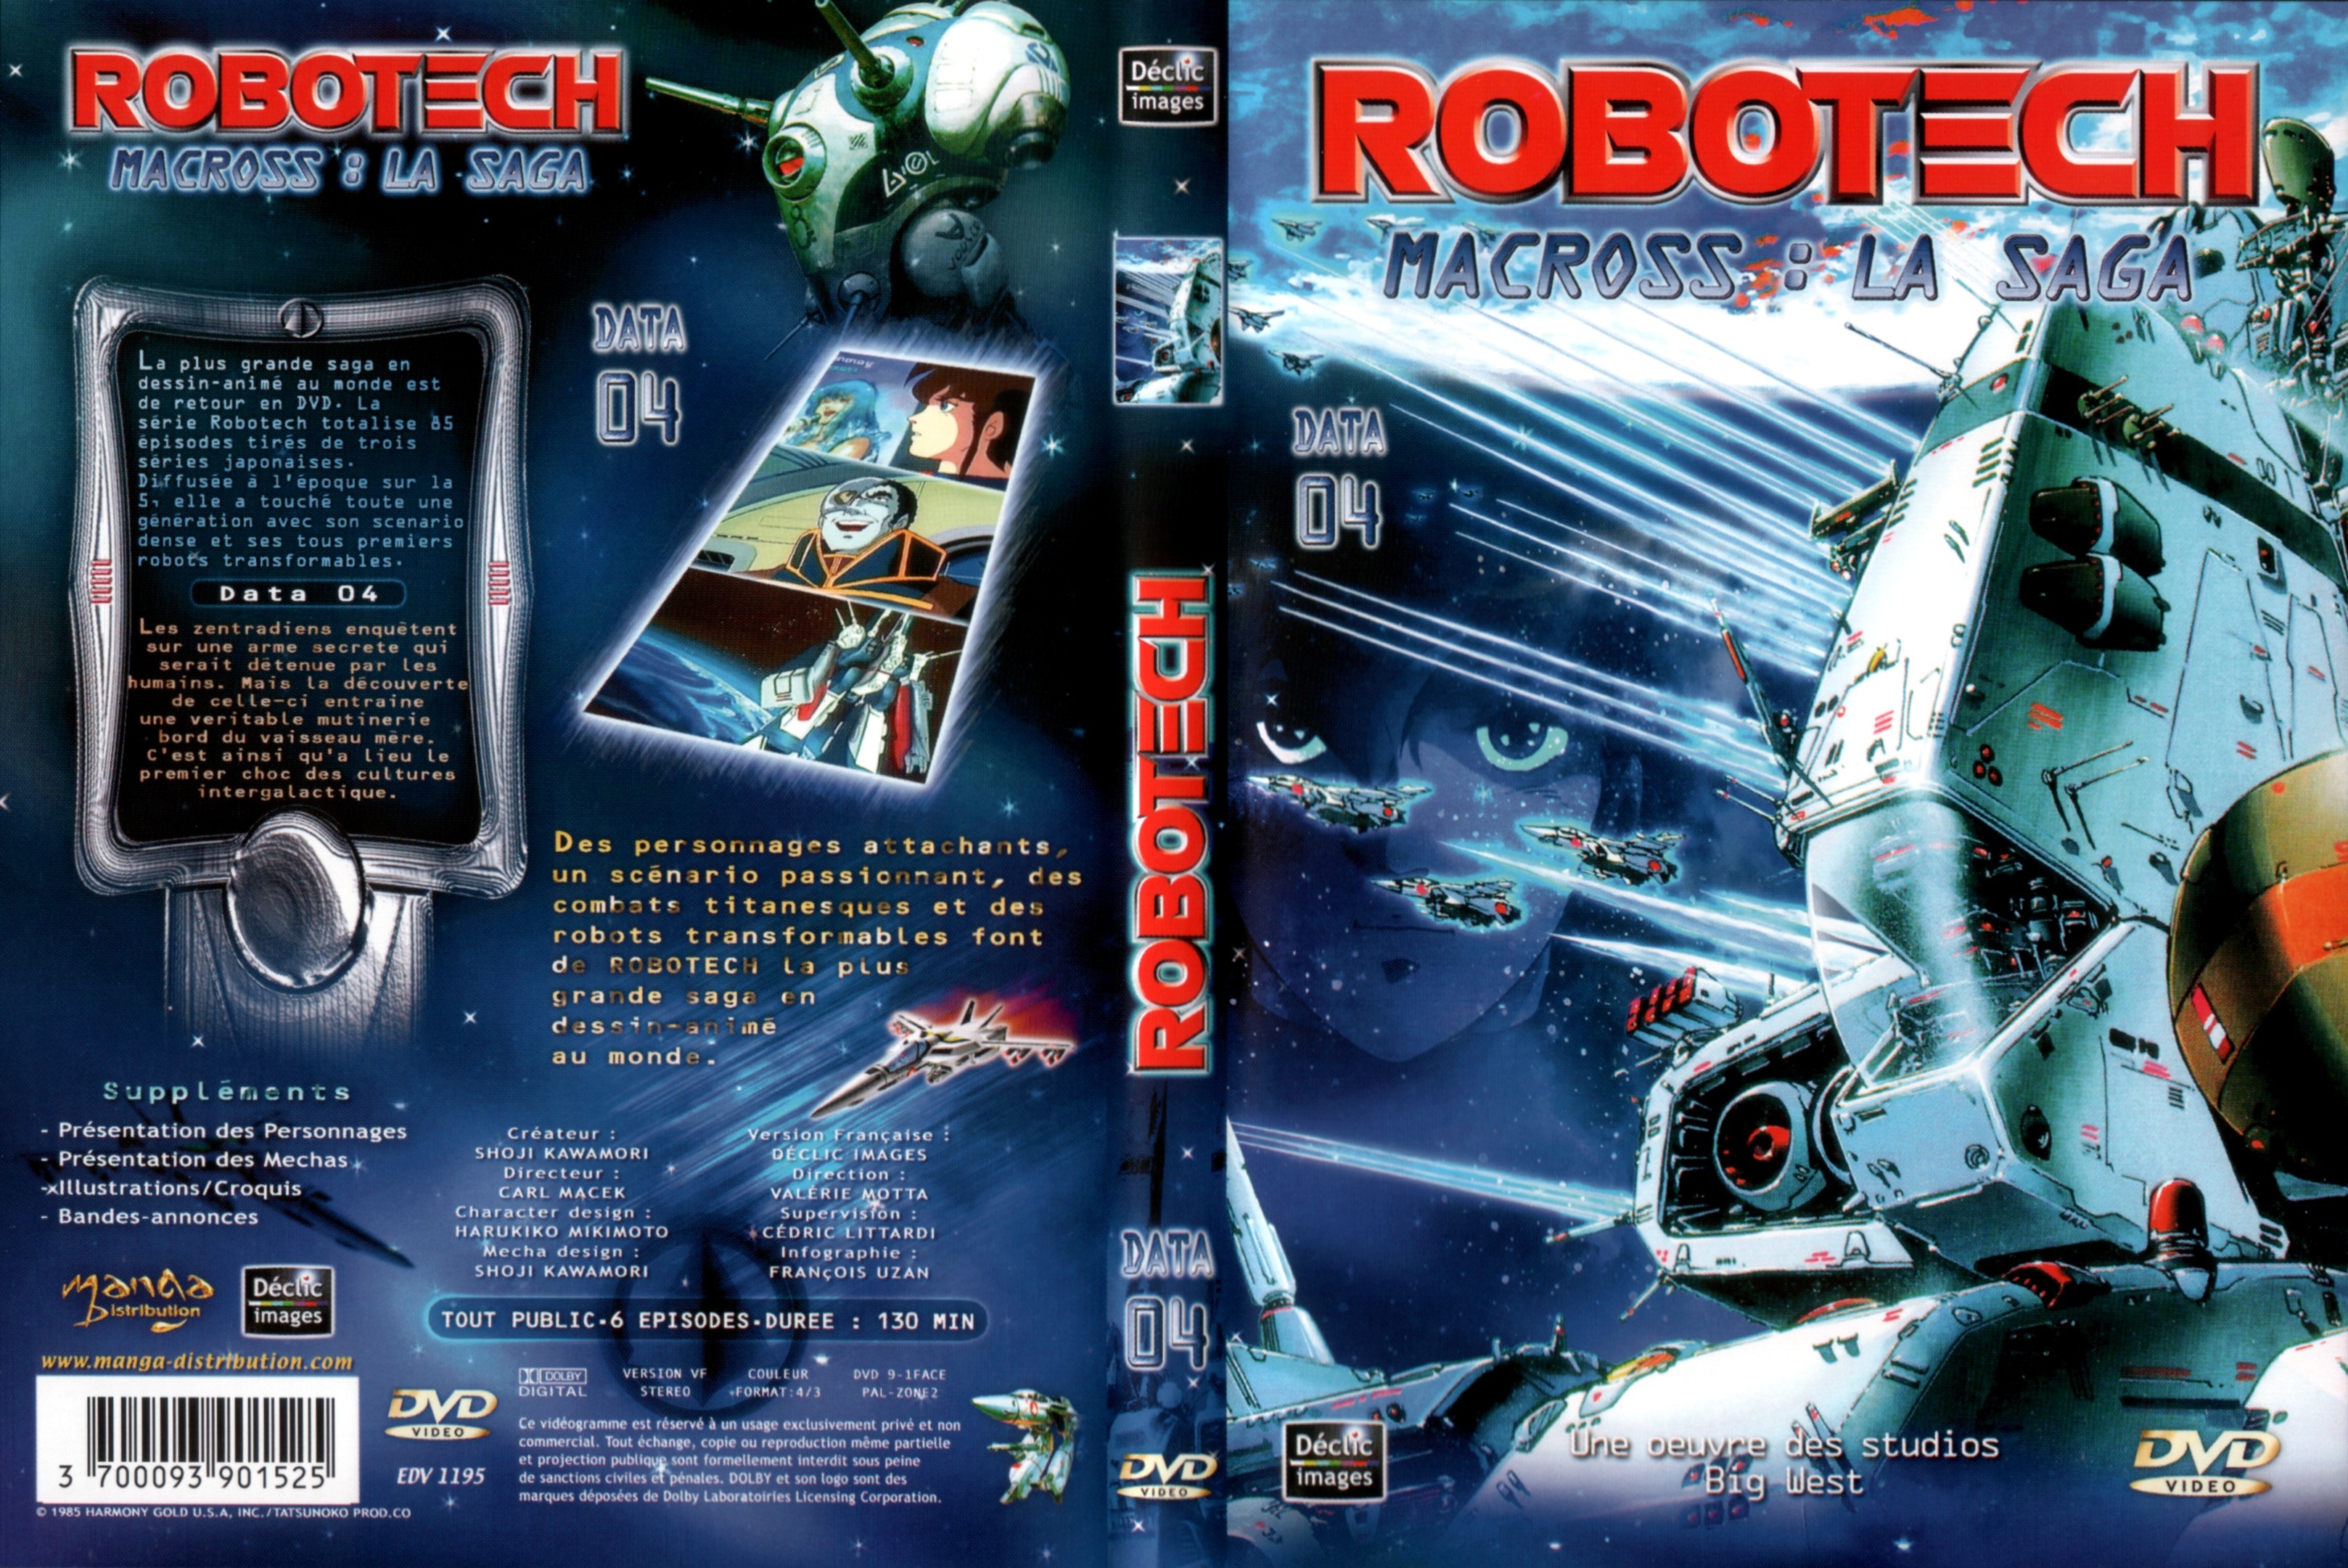 Jaquette DVD Robotech Macross la saga vol 4